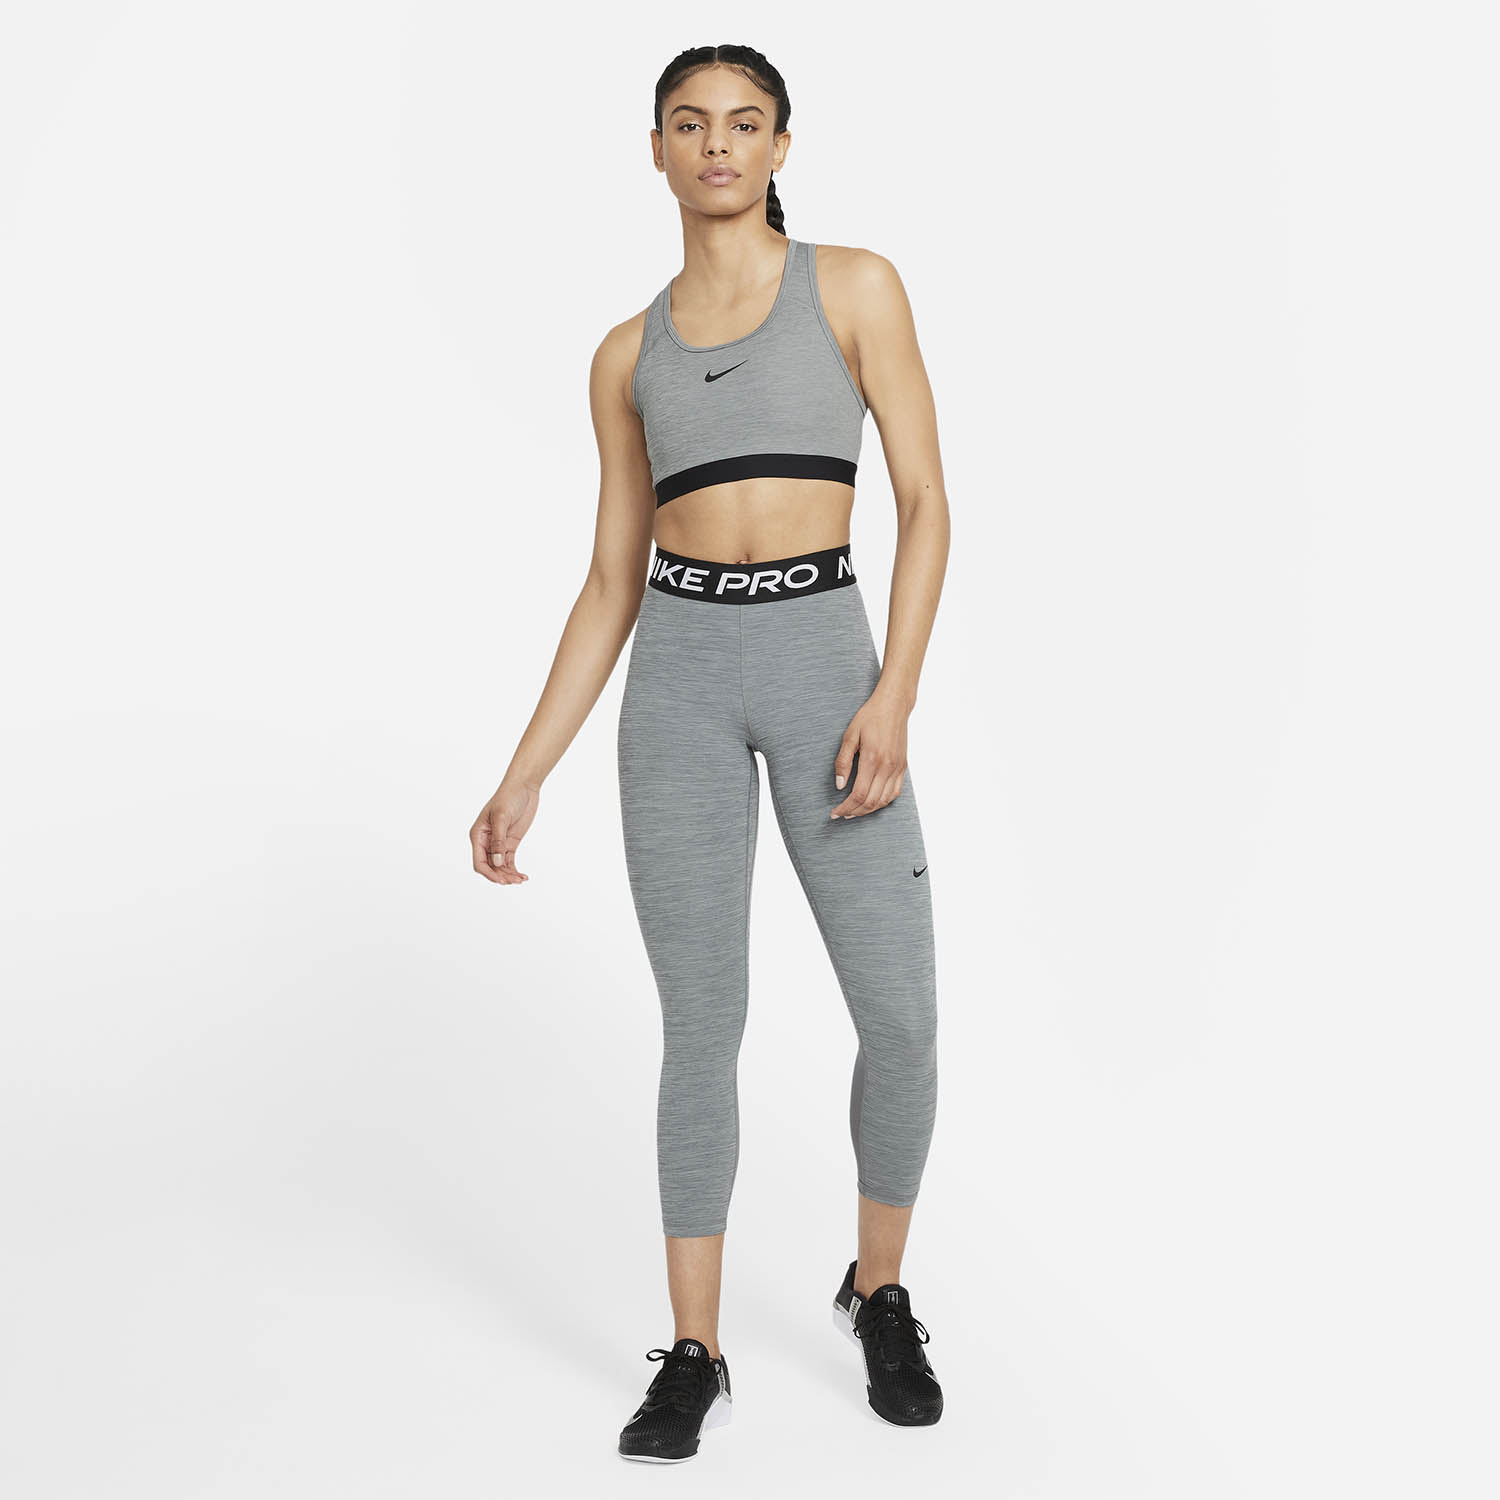 Nike Pro 365 Women's Training Tights - Smoke Grey/Heather/Black